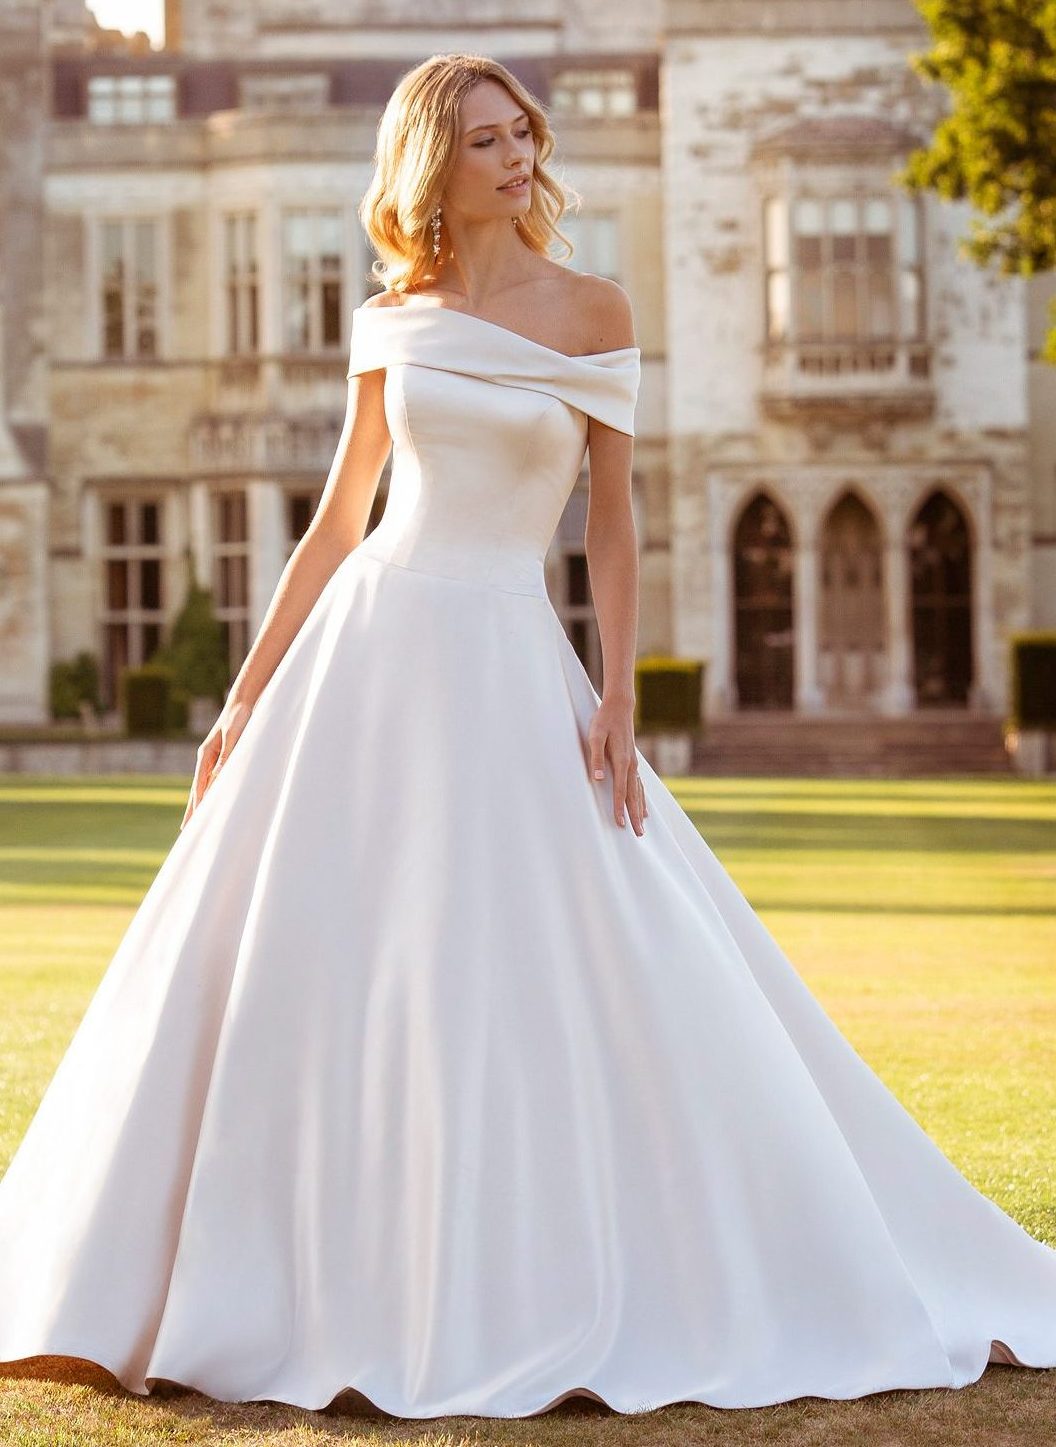 bardot style wedding dress